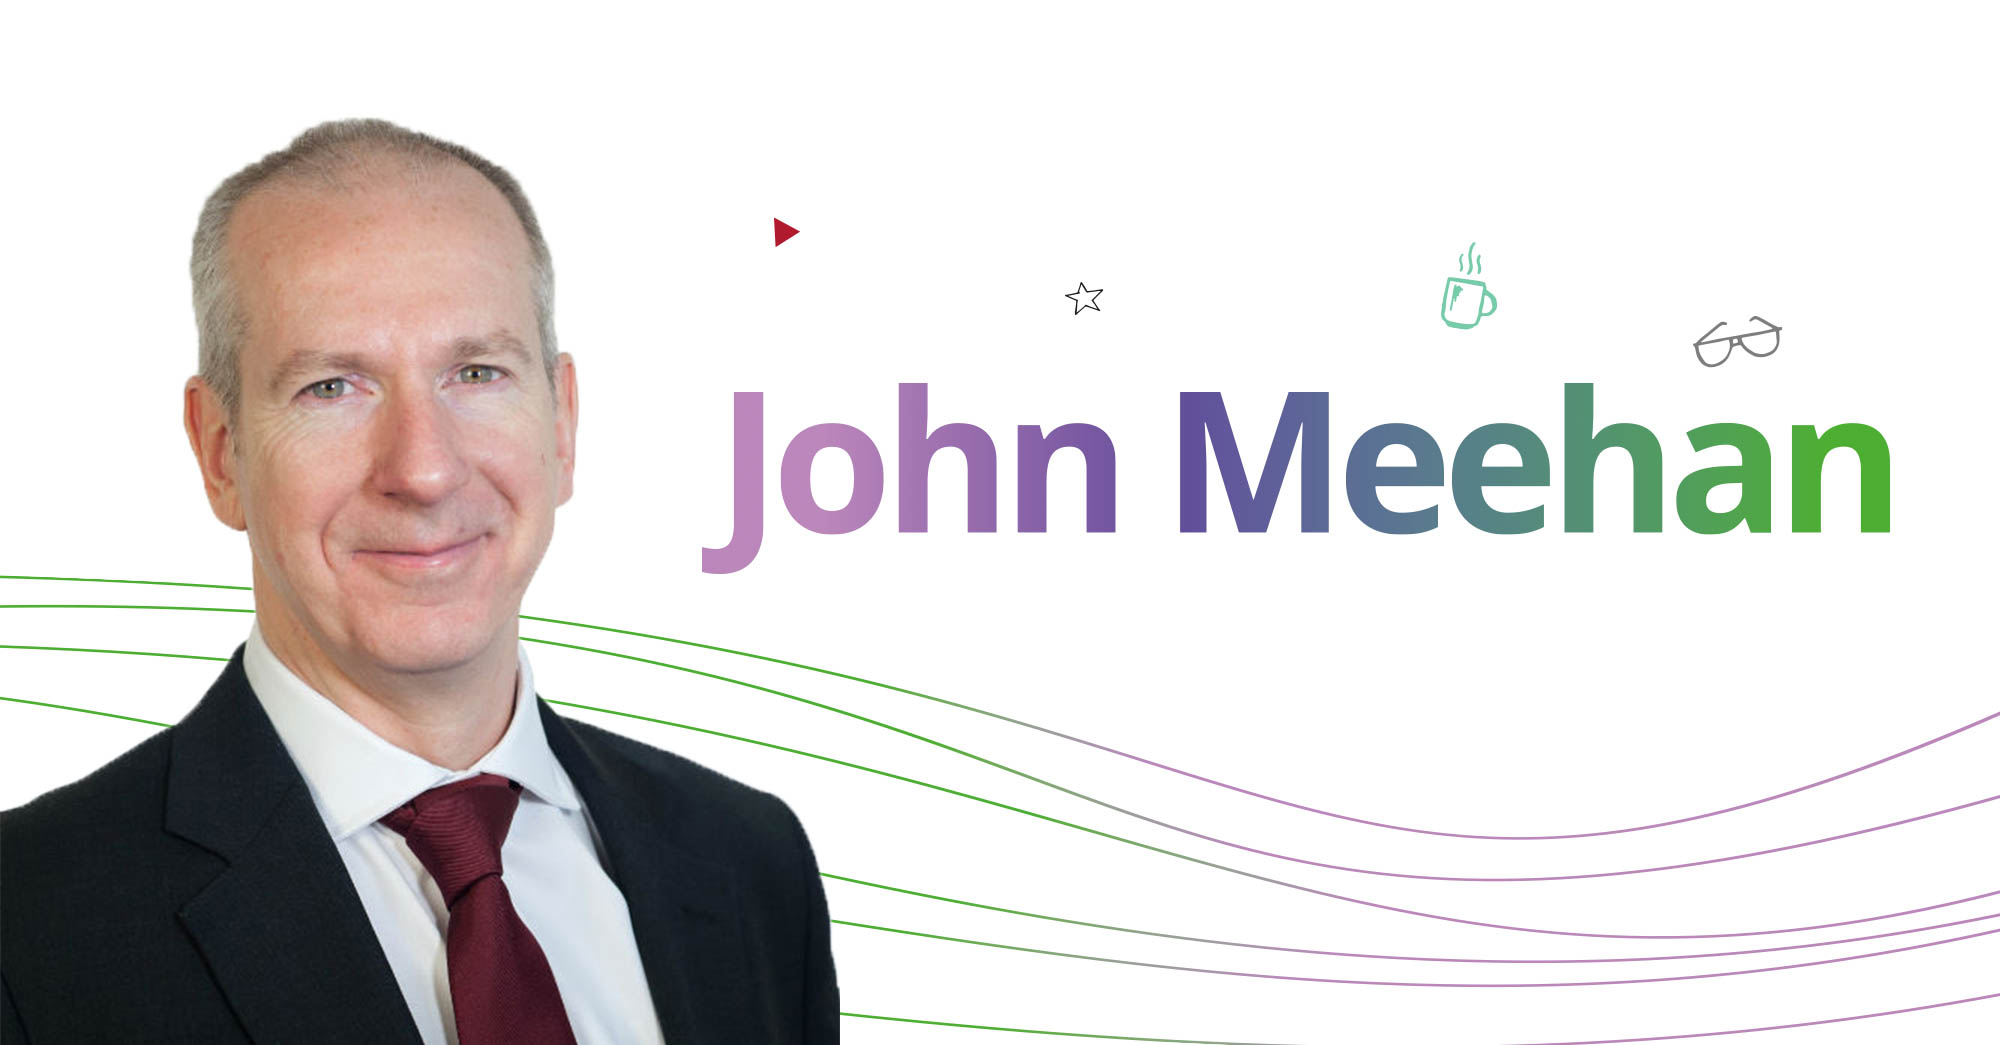 Global Shares welcomes John Meehan as Managing Director